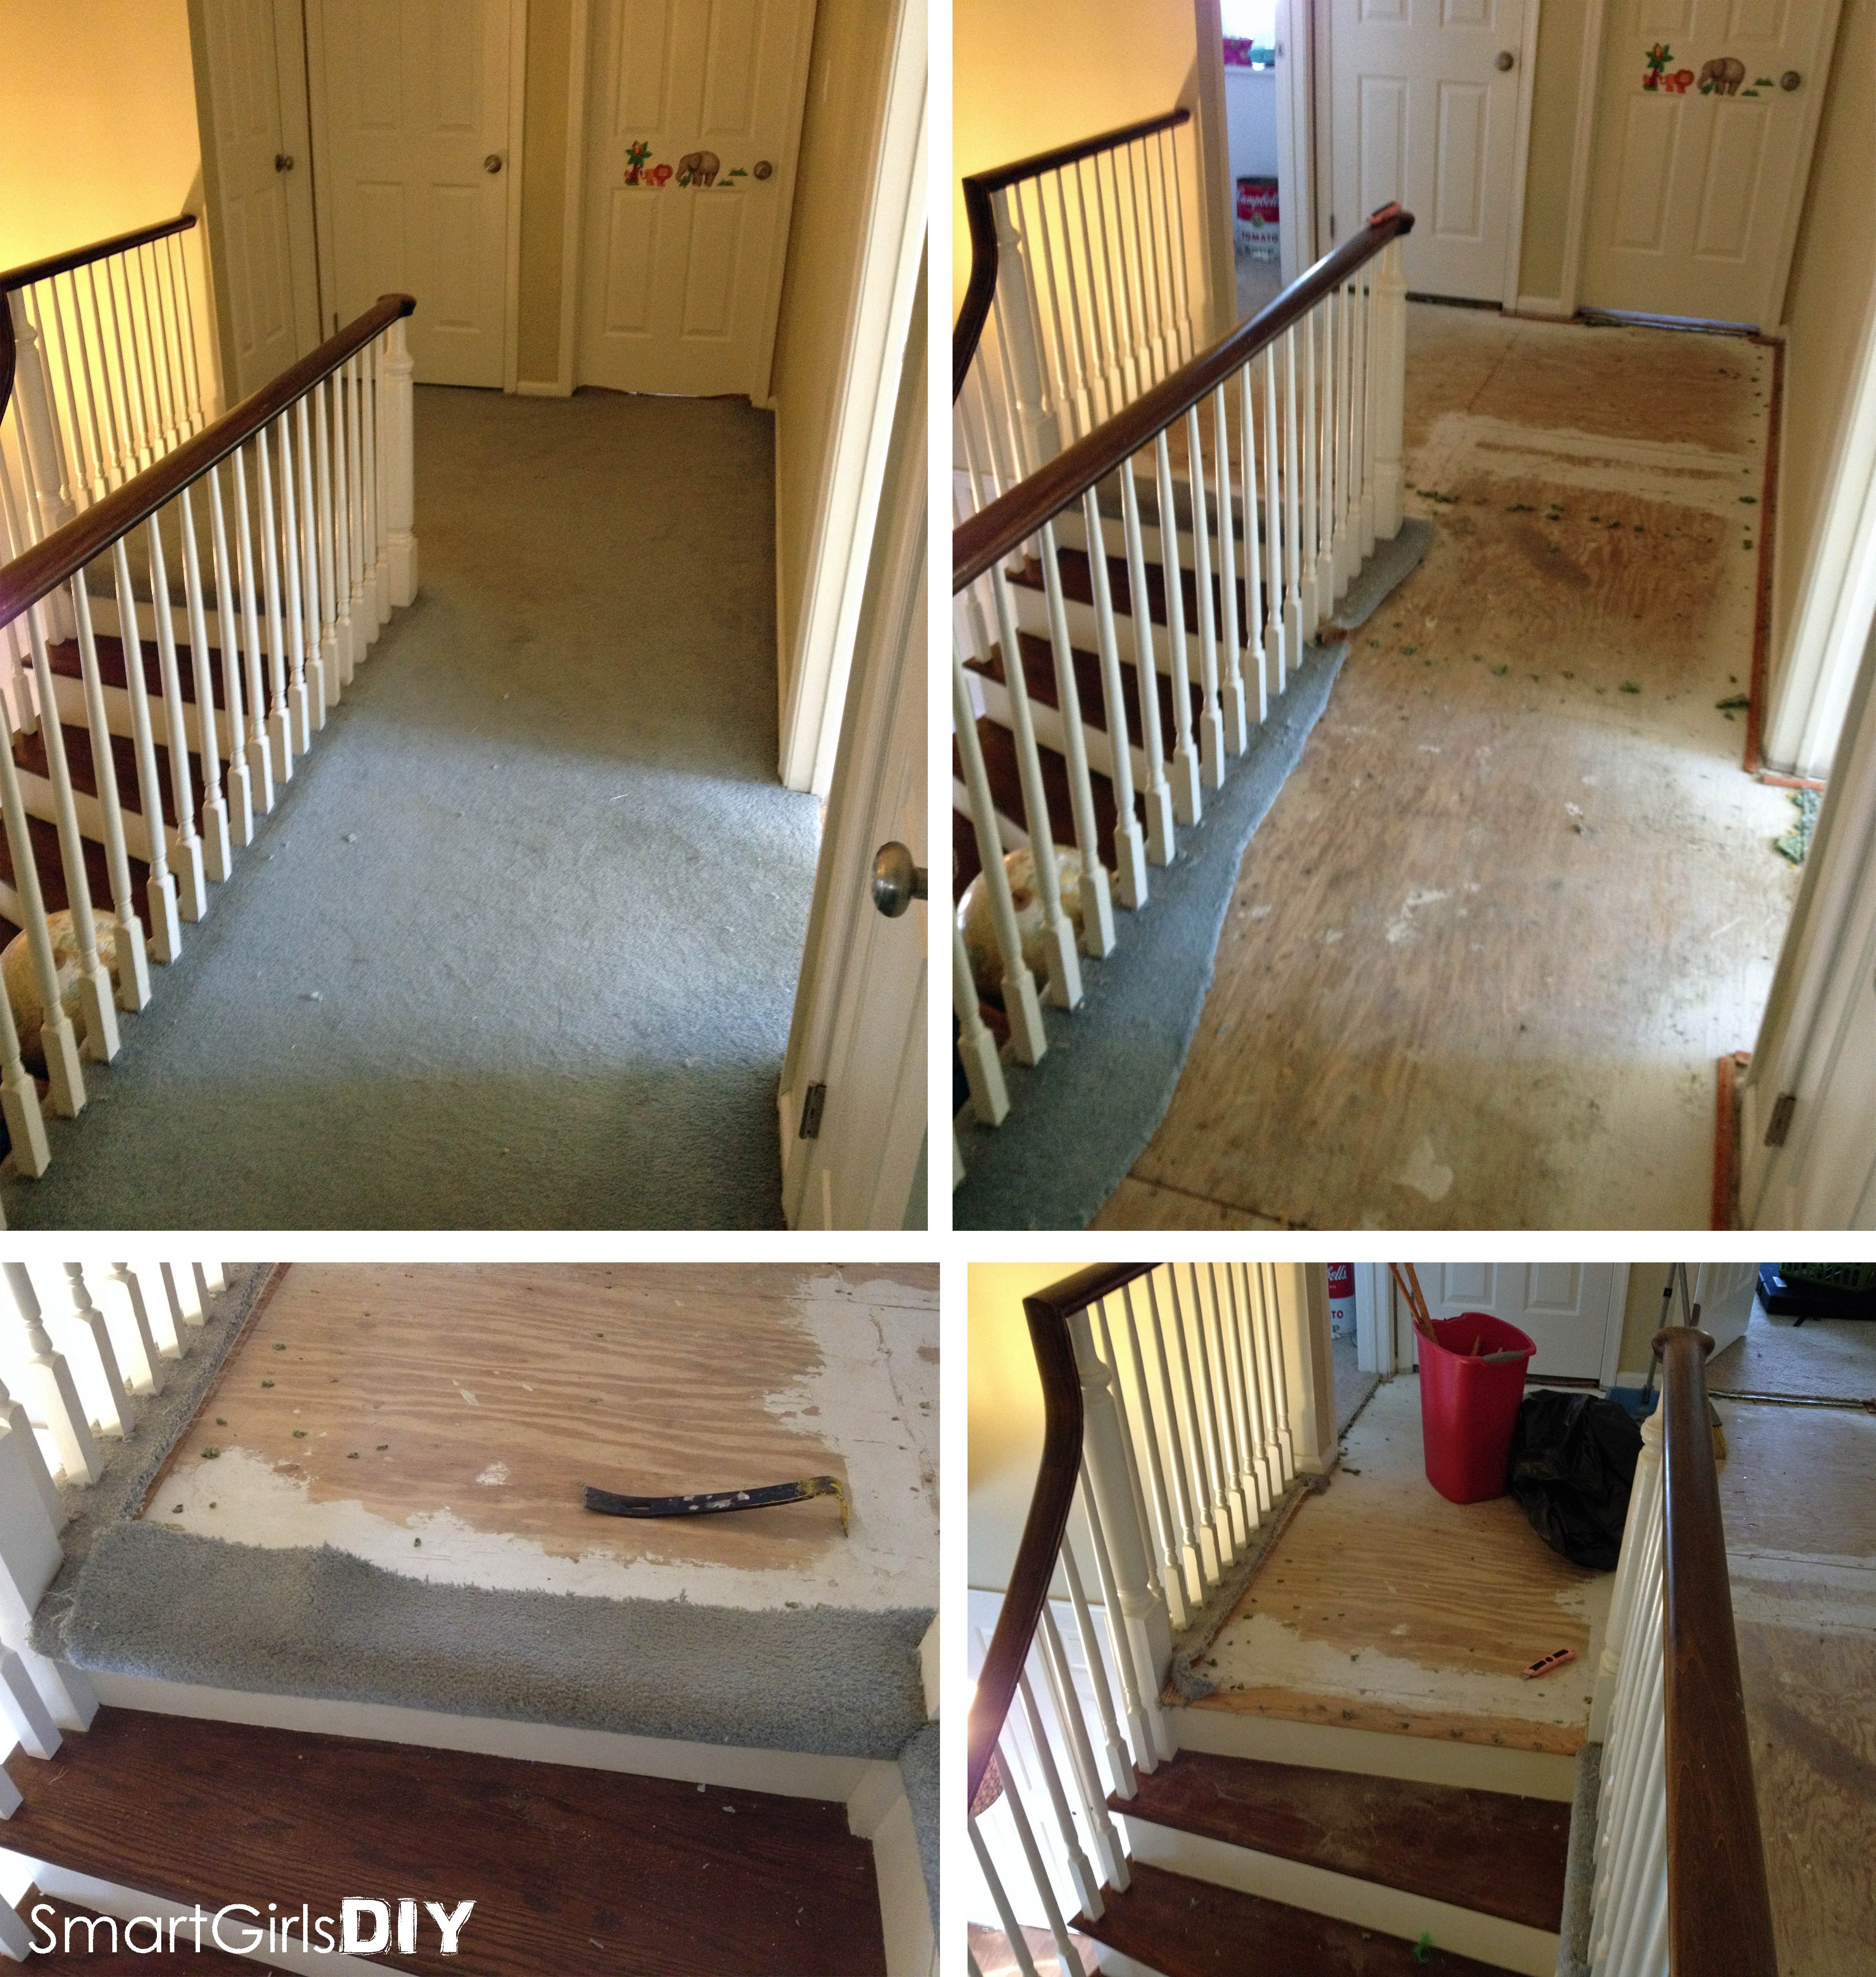 felt paper for hardwood flooring of upstairs hallway 1 installing hardwood floors with regard to removing carpet from hallway